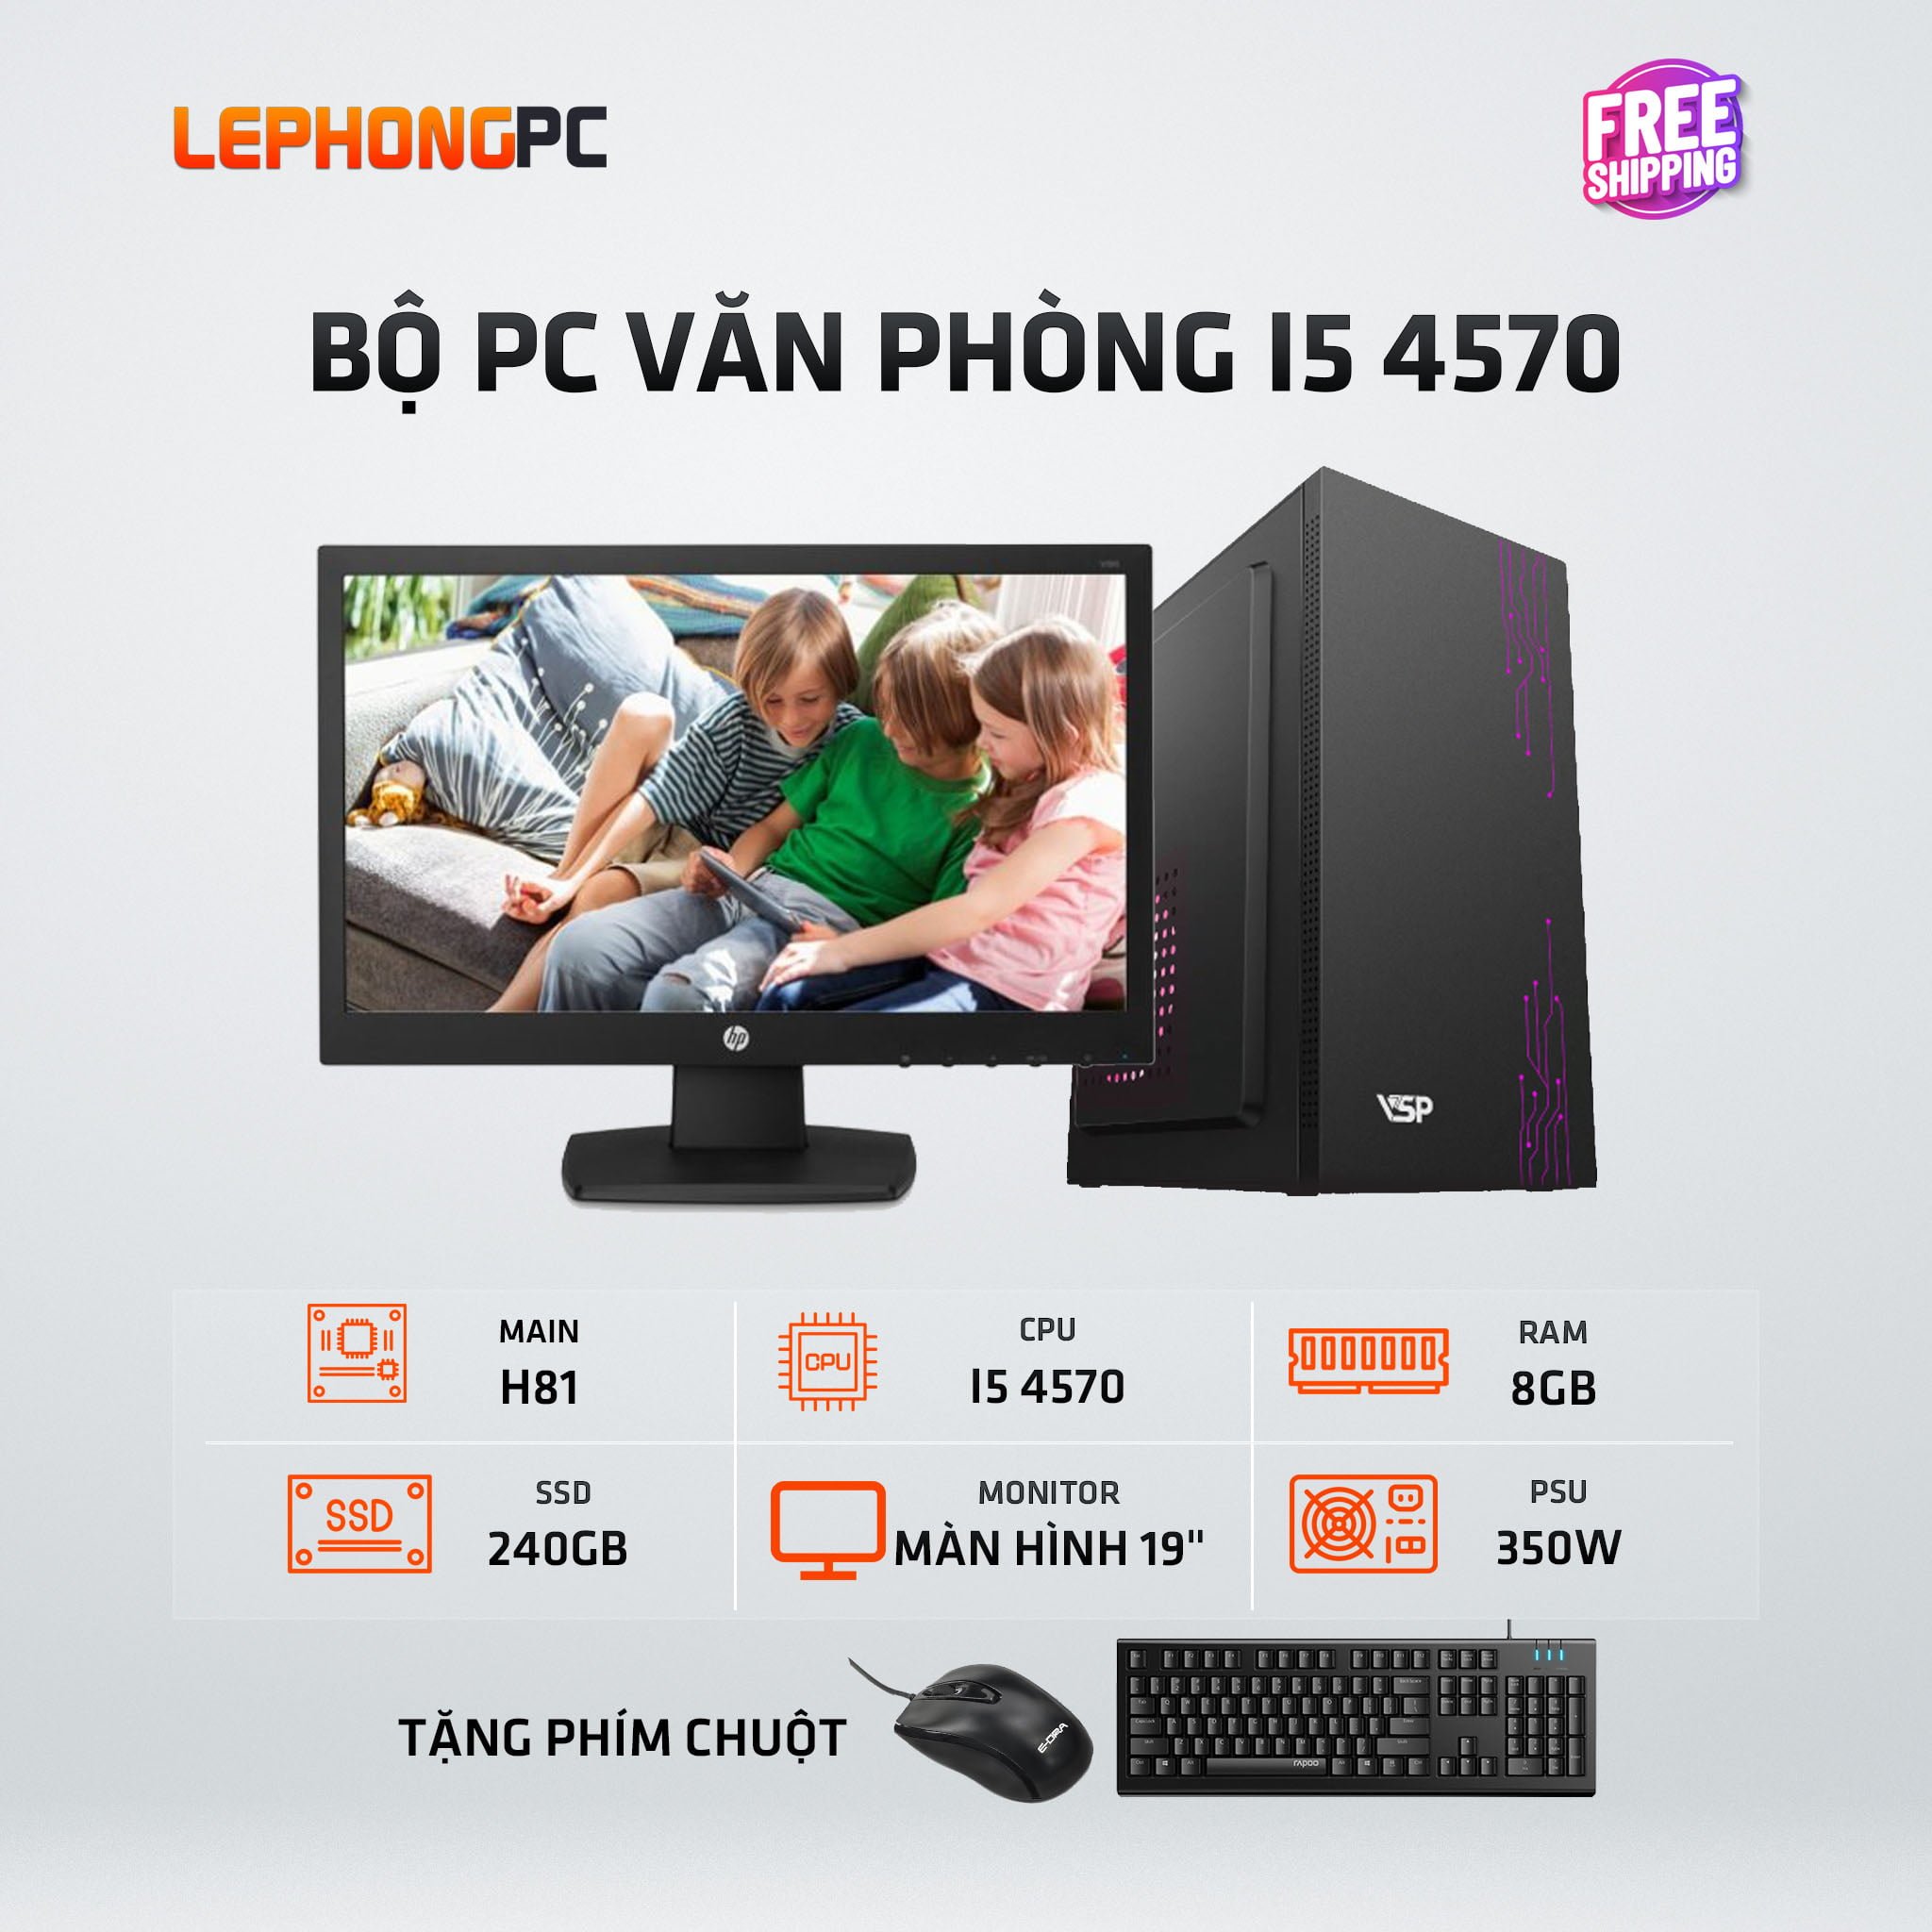 BO PC VAN PHONG I5 4570